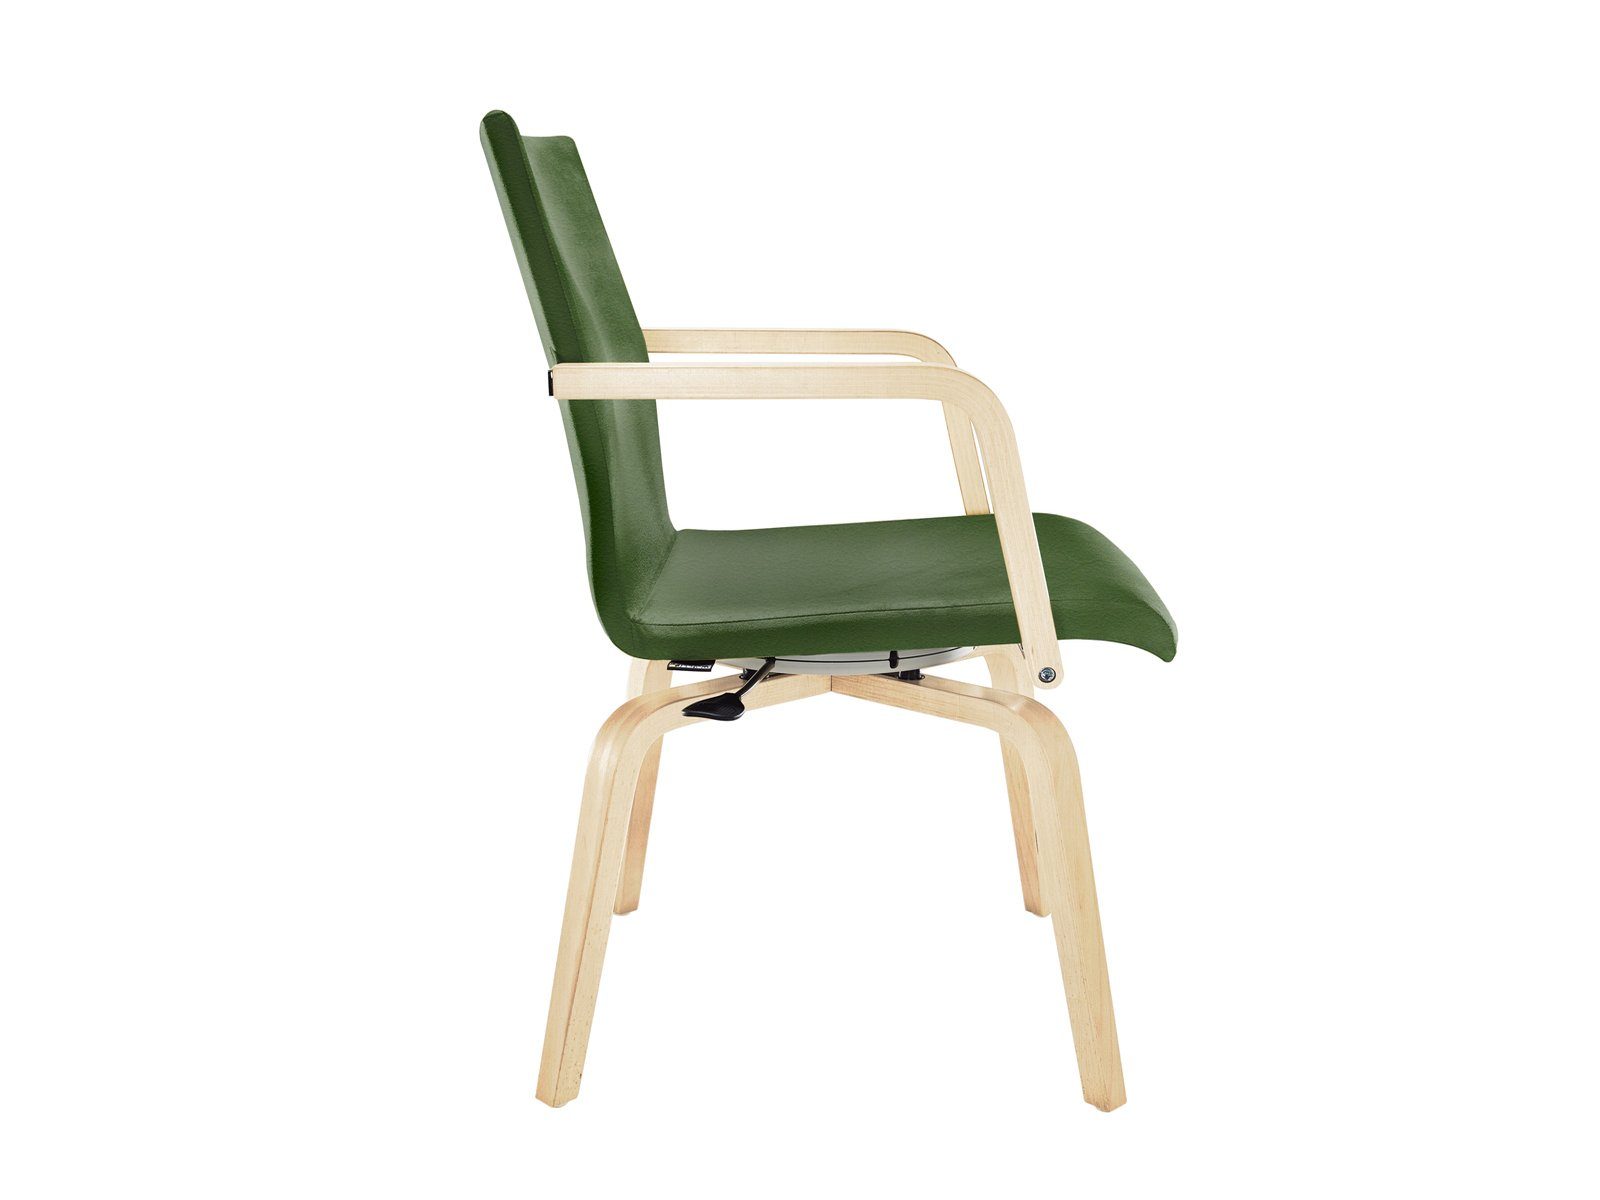 Armlehnstuhl, Olivgrün desinfizierbar Grün Senioren-stuhl Pflegestuhl Sitzkultur Drehstuhl mit Mauser Armlehnen